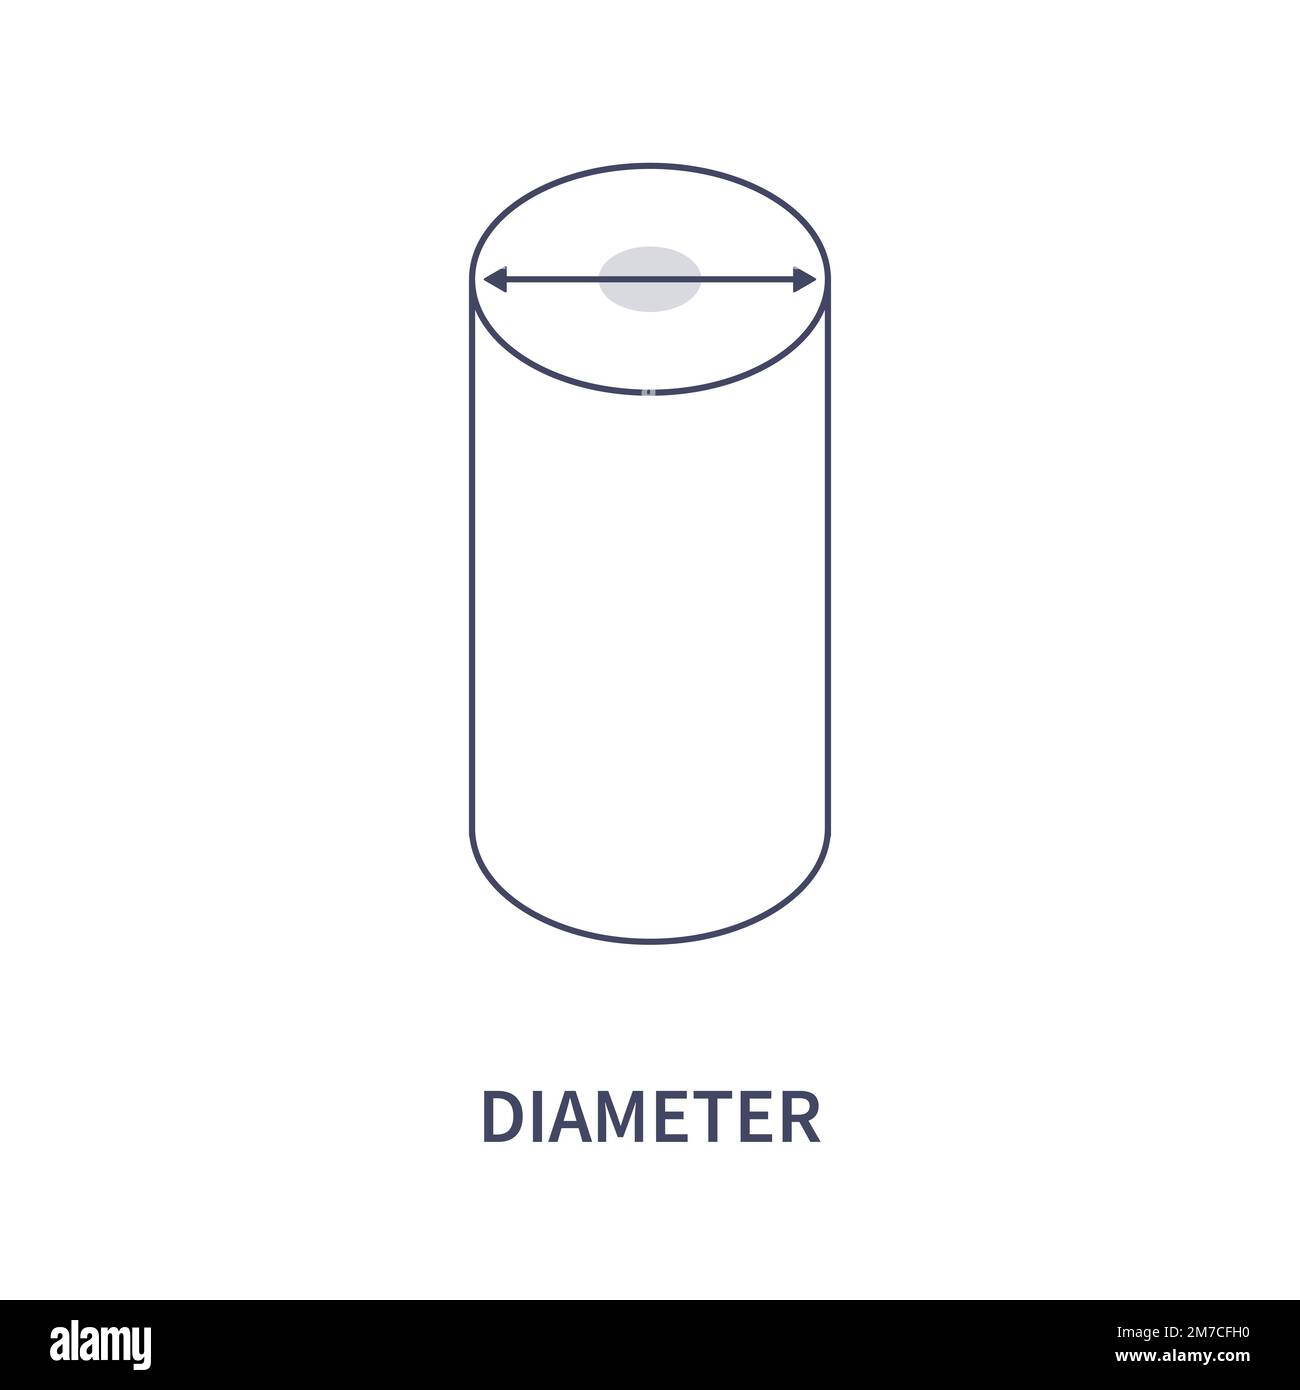 Cylinder pipe diameter geometric diagram icon Stock Vector